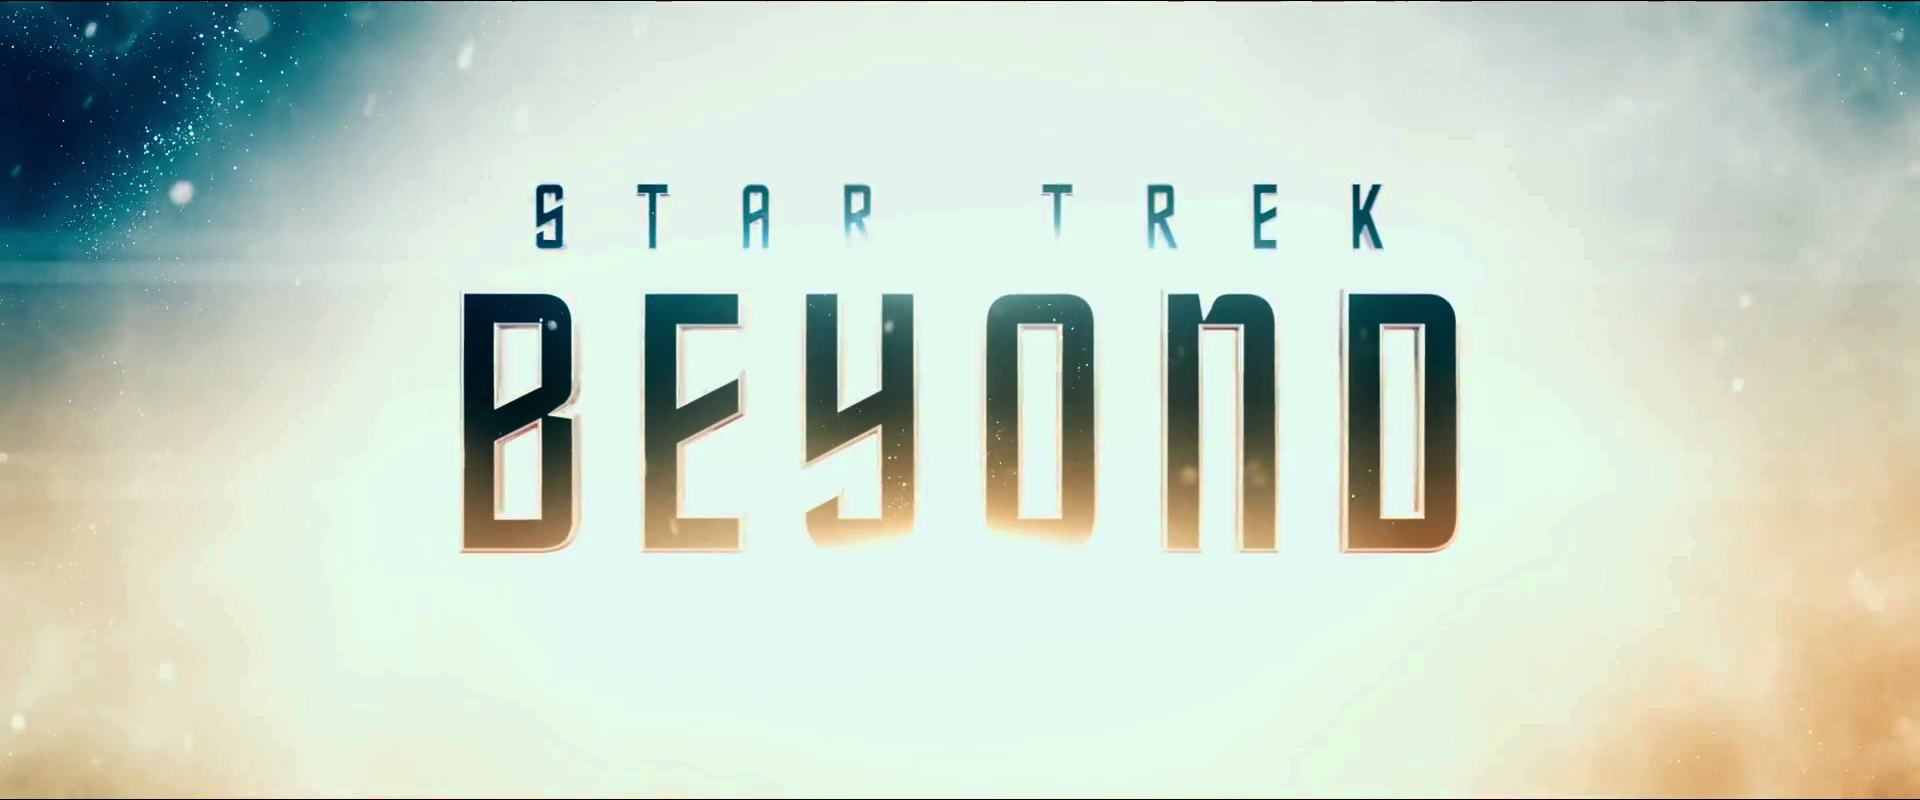 Star Trek Beyond - již v červenci 2016